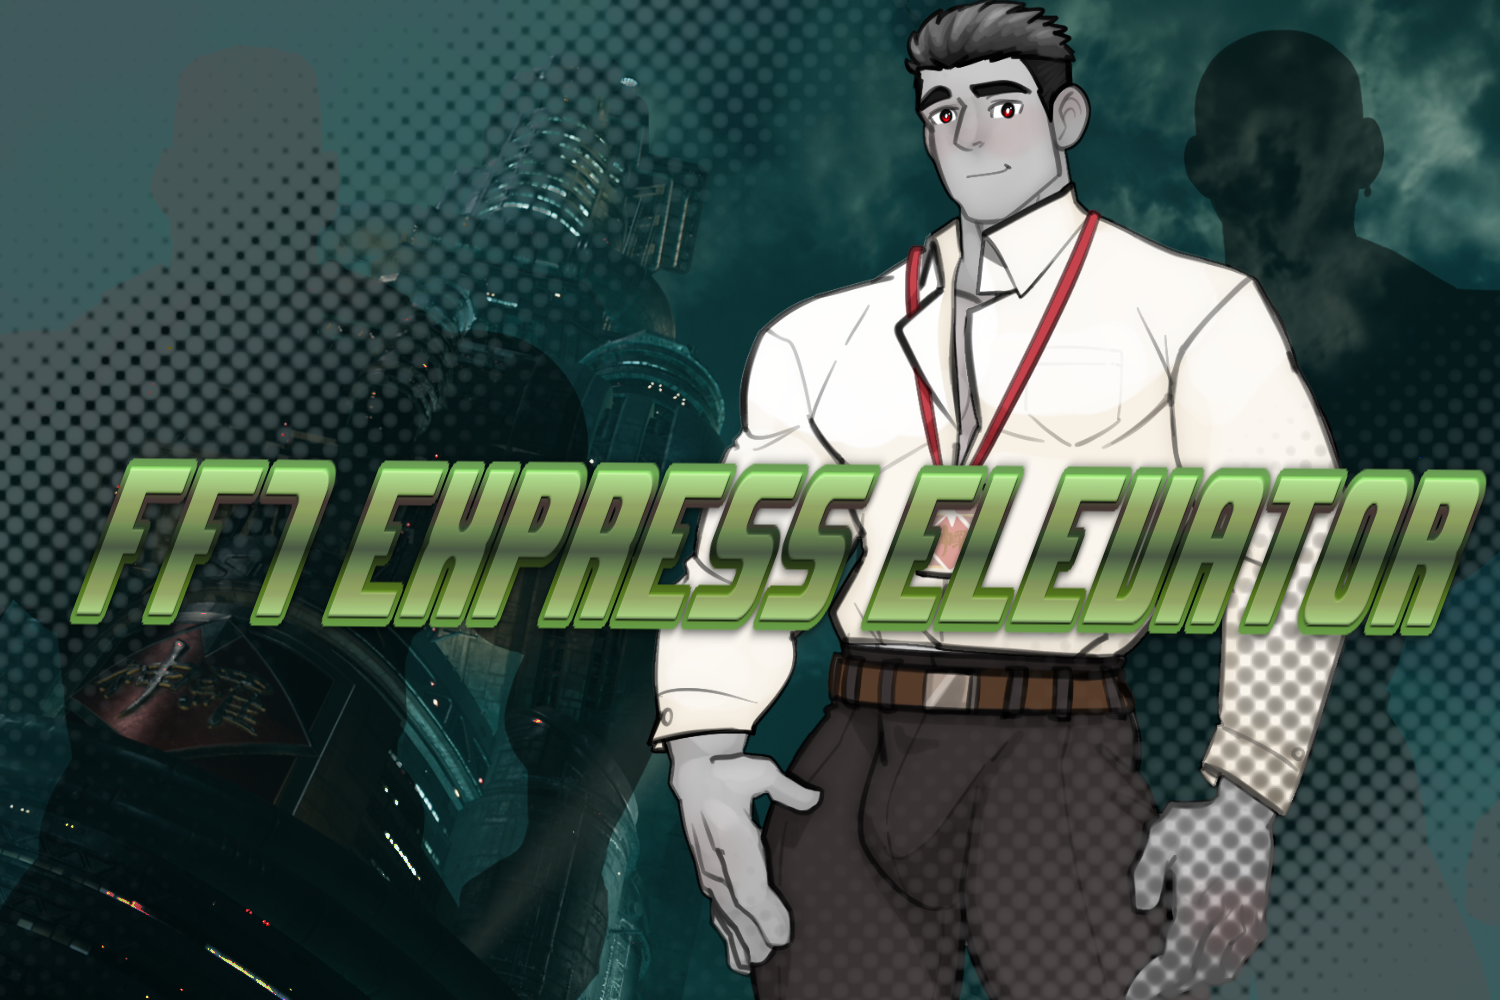 FF7 Express Elevator